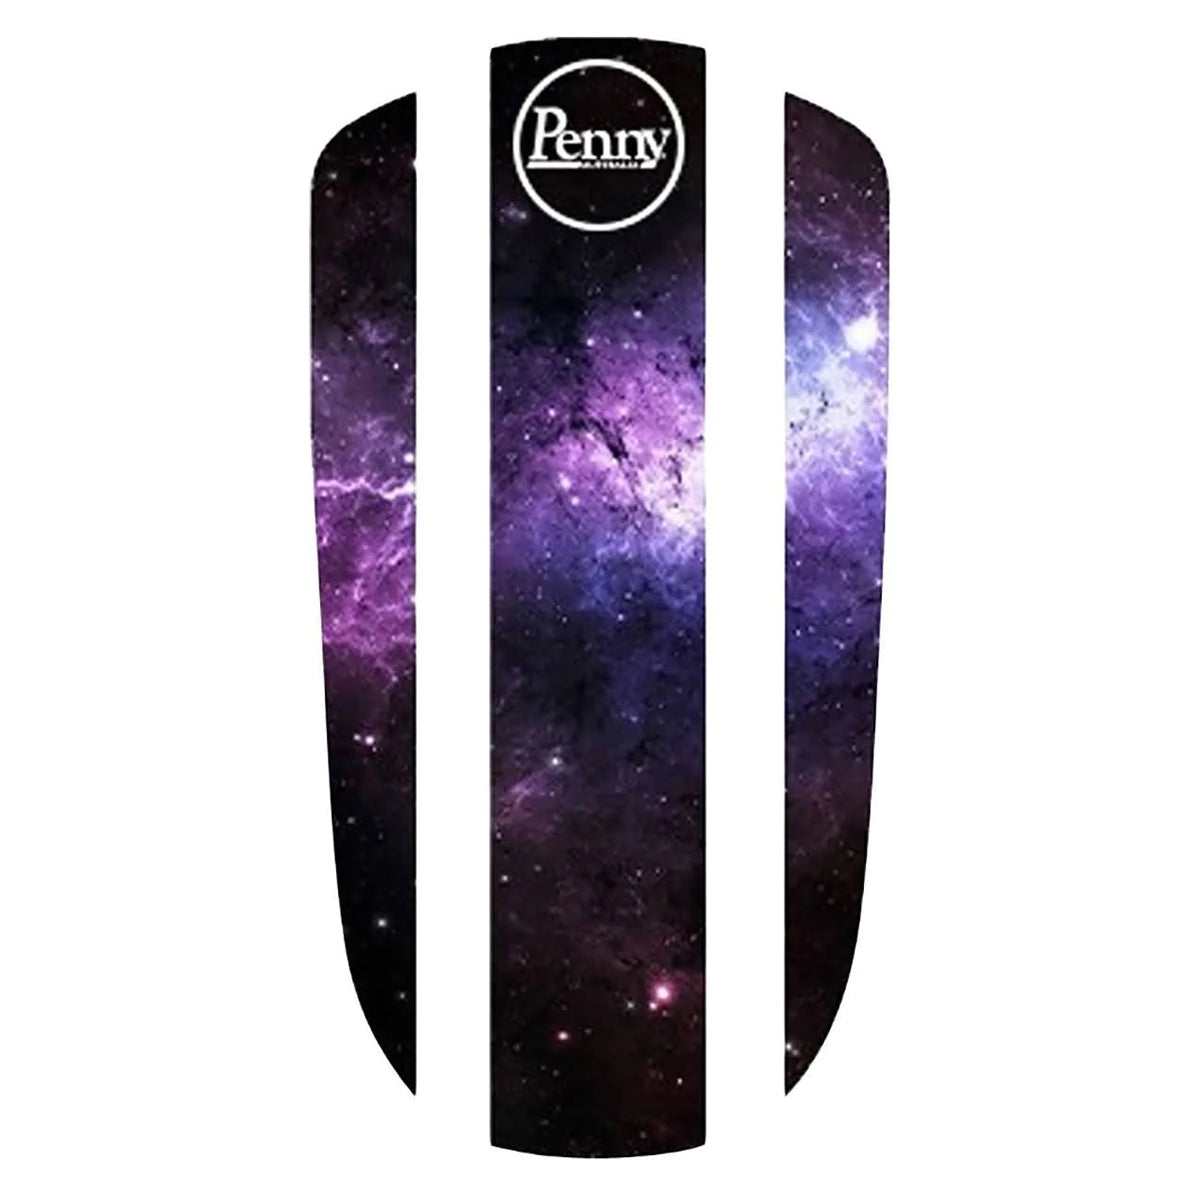 Penny Nickel Deck Panel Astro 27 Skateboard Sticker Accessories